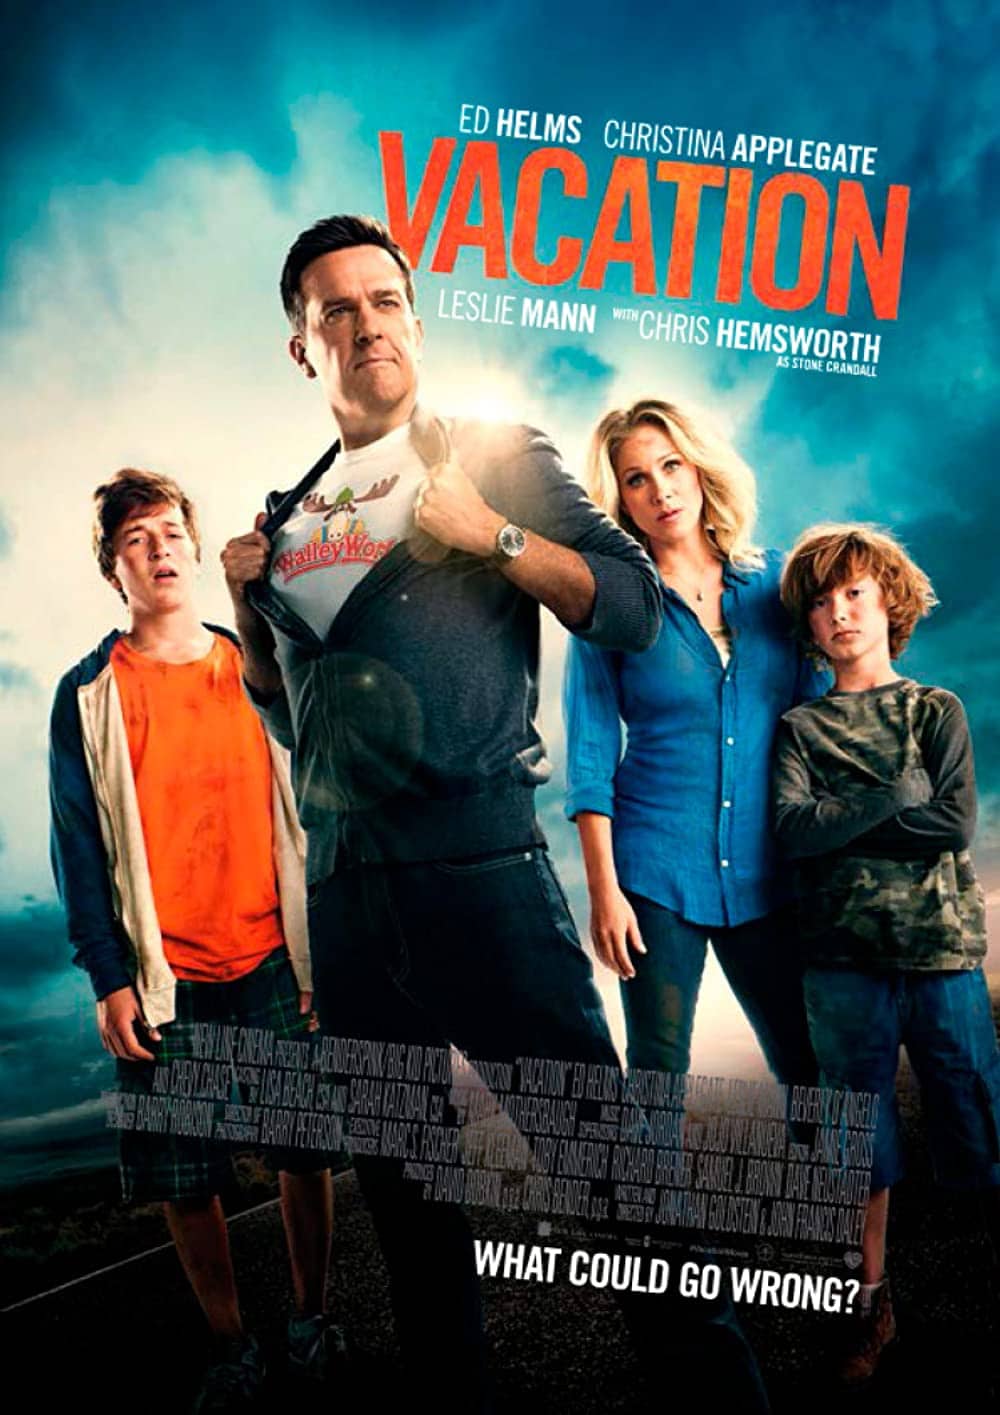 Hangover similar movie Vacation (2015)